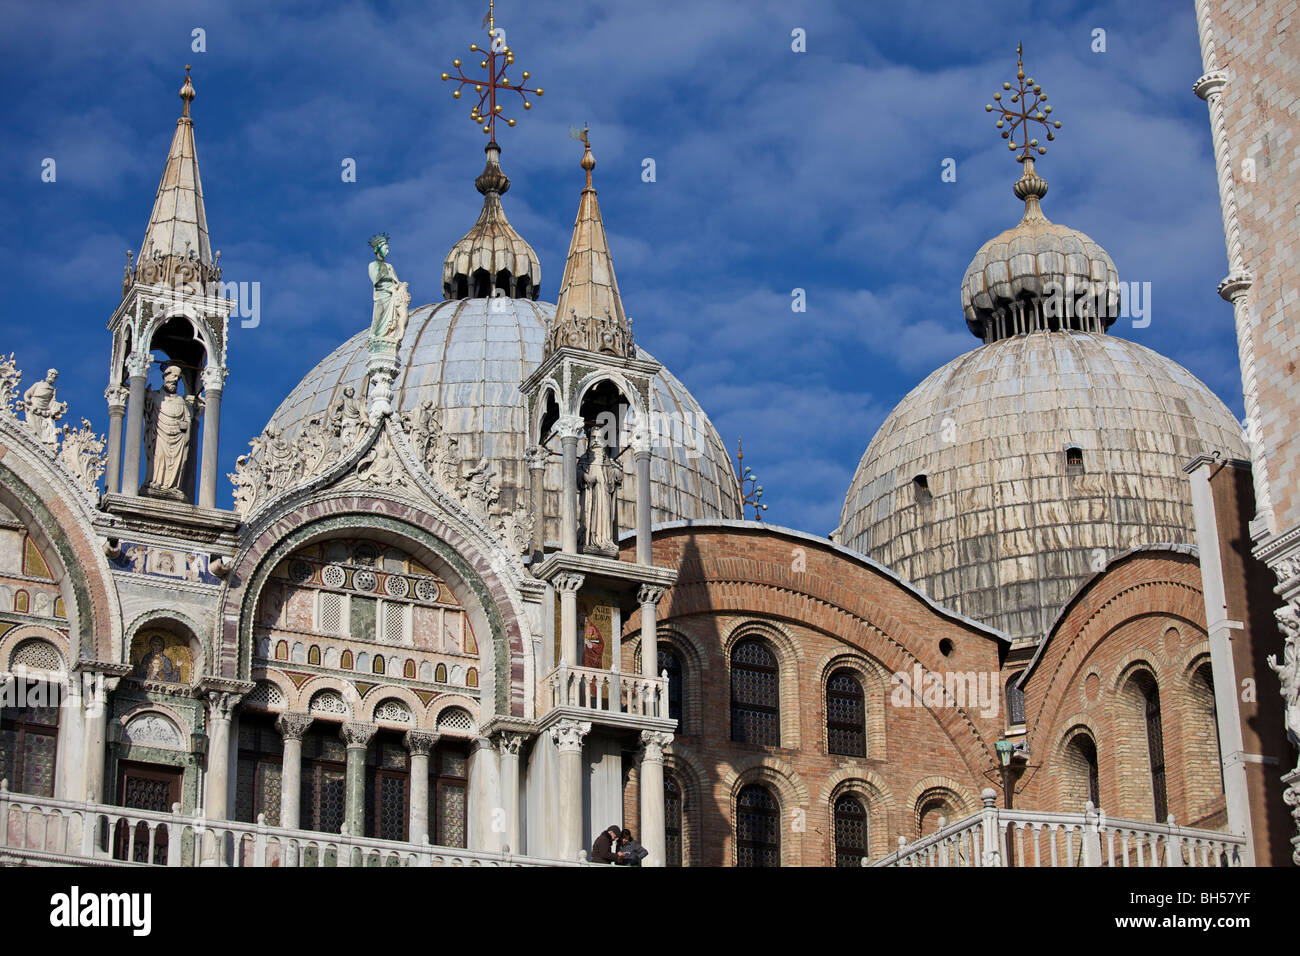 St Marks Basilica (San Marco Basilica), in the sunshine, Venice, Italy Stock Photo